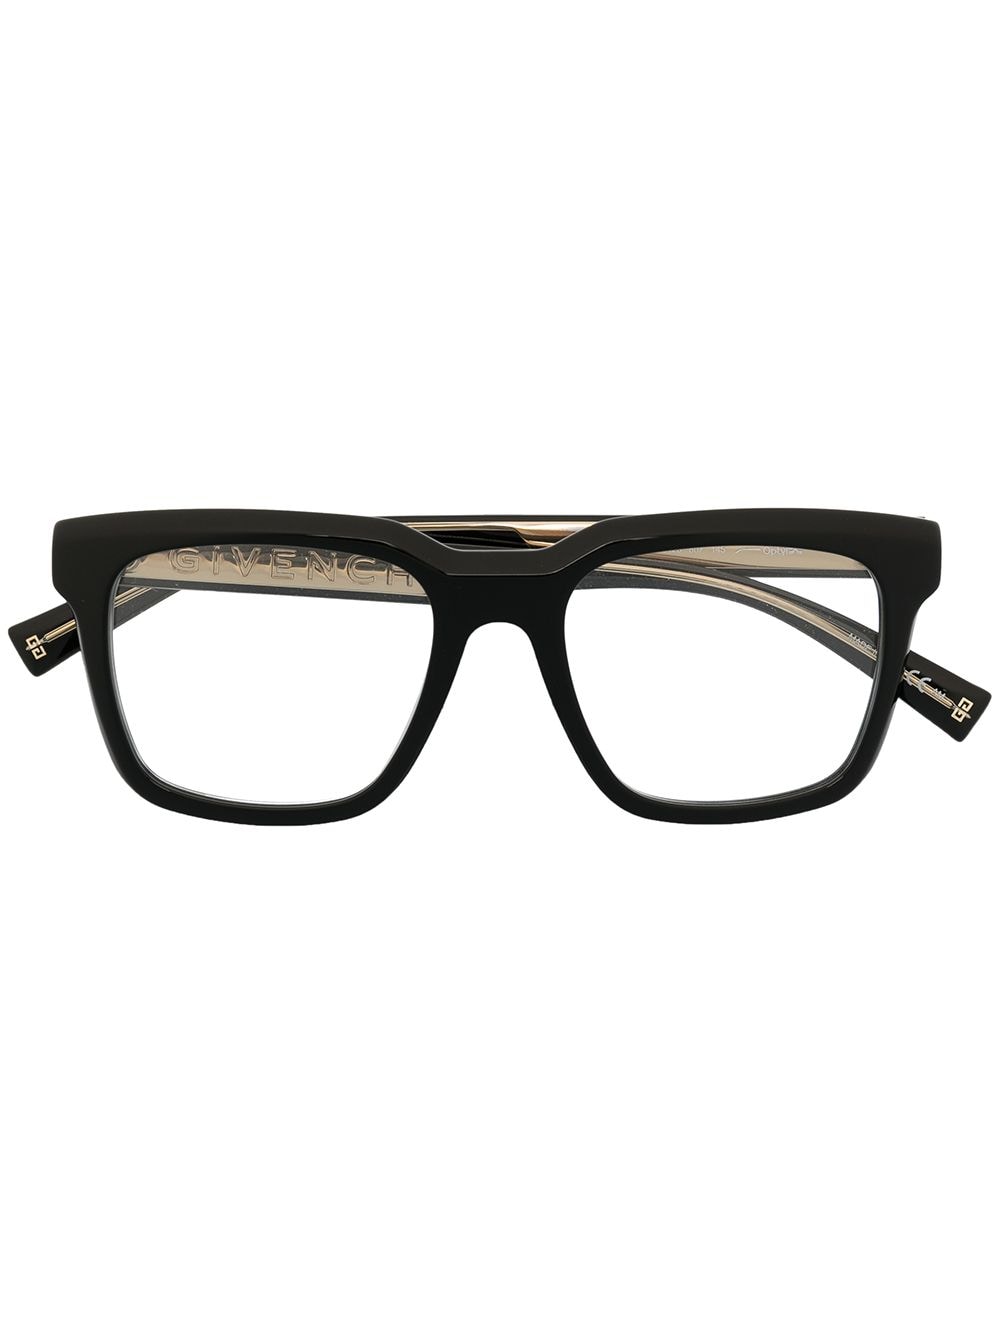 фото Givenchy eyewear очки gv в квадратной оправе